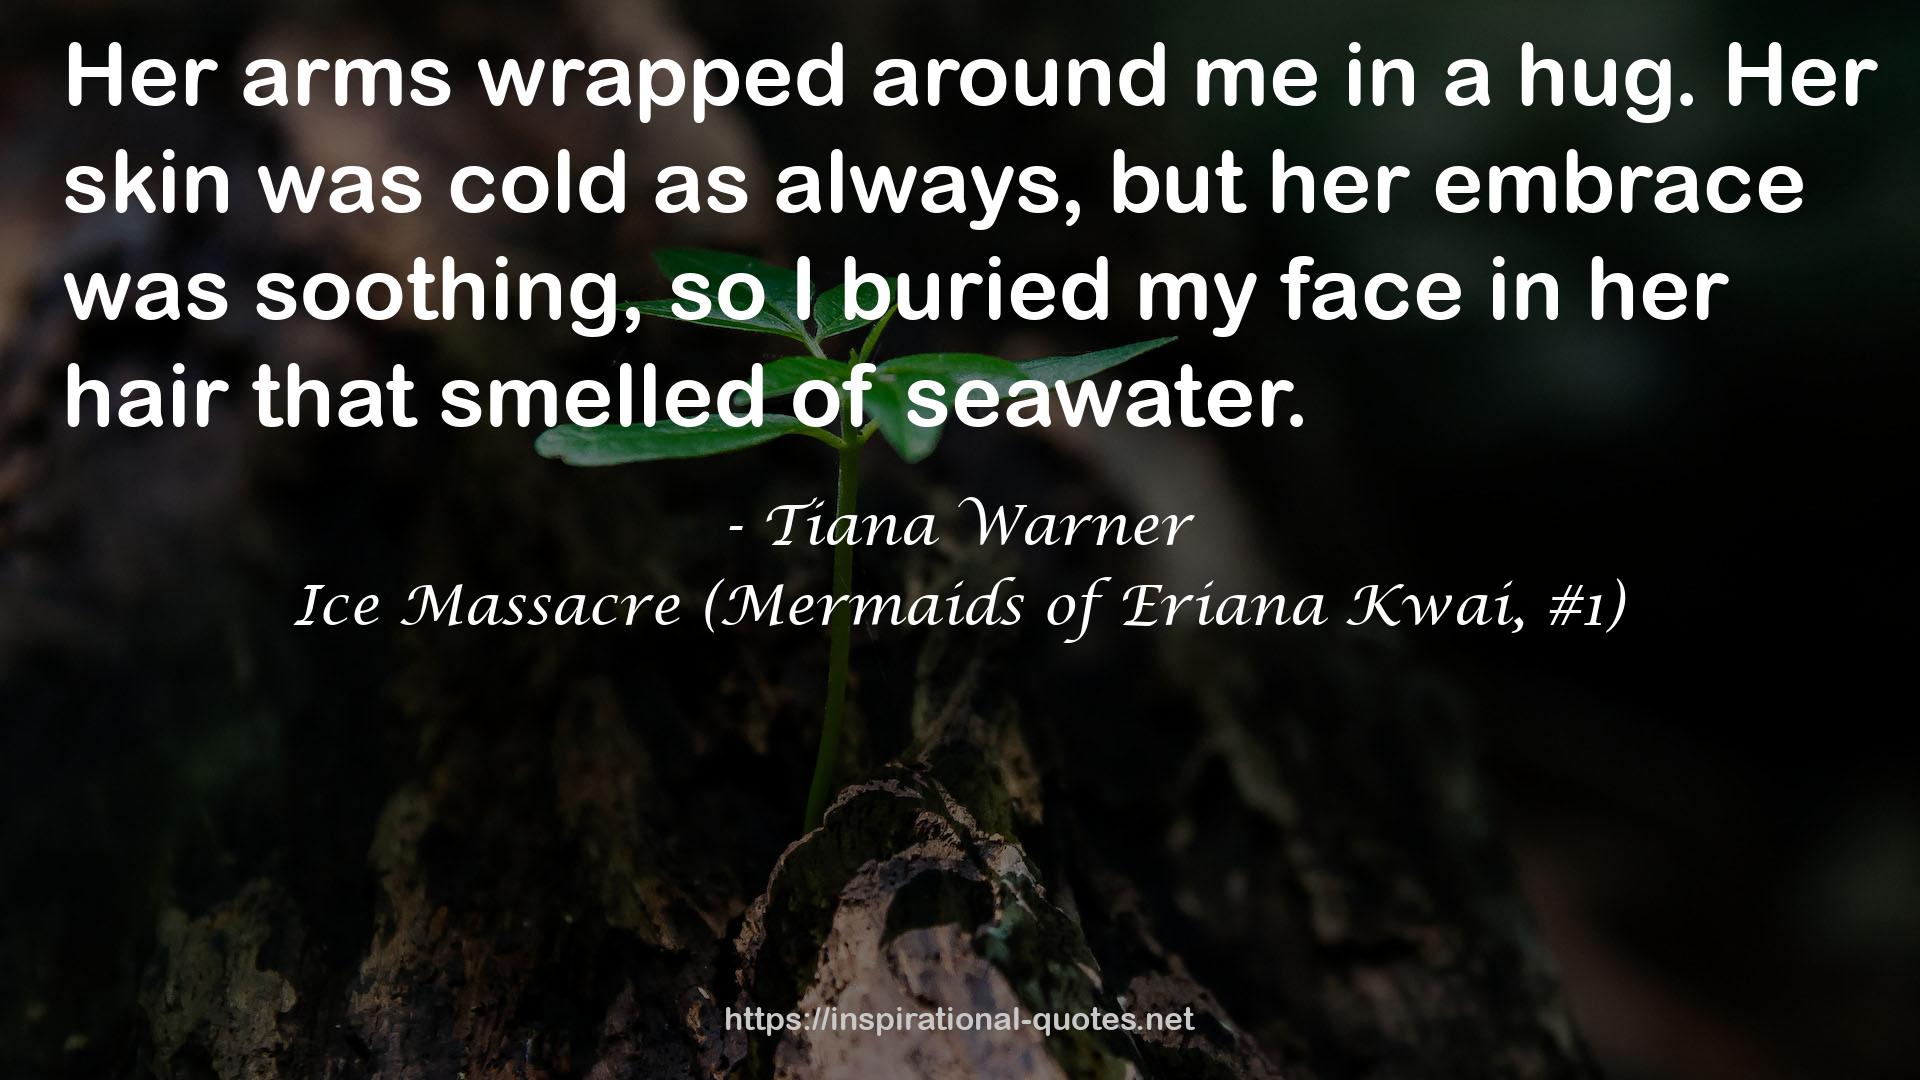 Ice Massacre (Mermaids of Eriana Kwai, #1) QUOTES